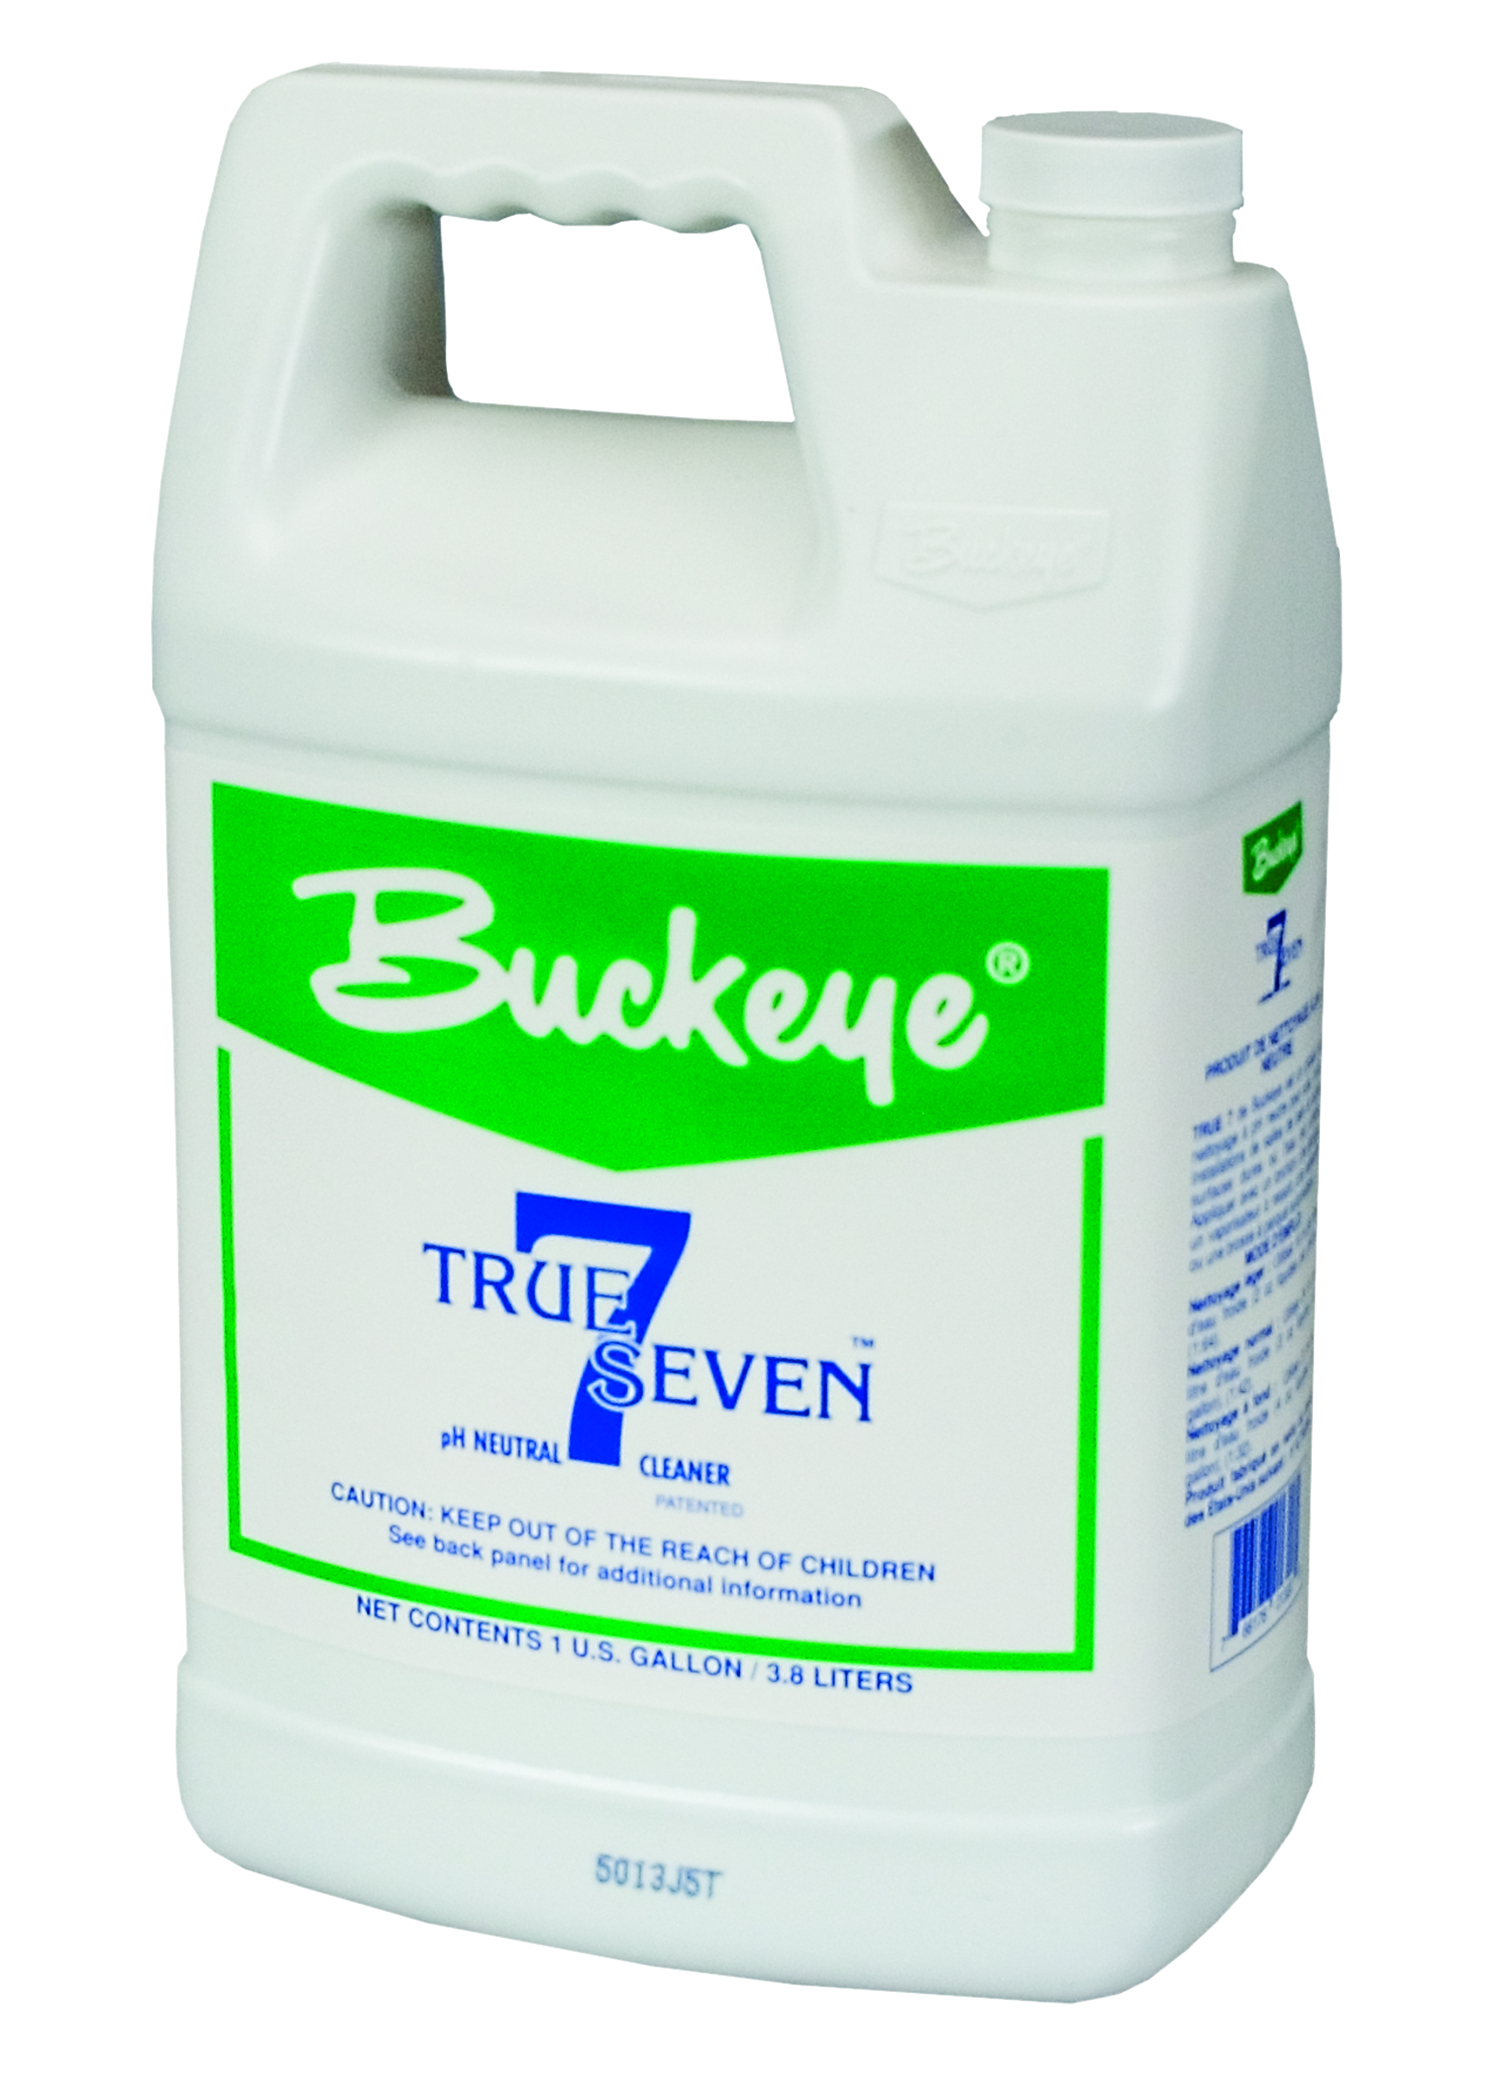 Buckeye True 7 pH Neutral 
Cleaner - (4gal/cs)